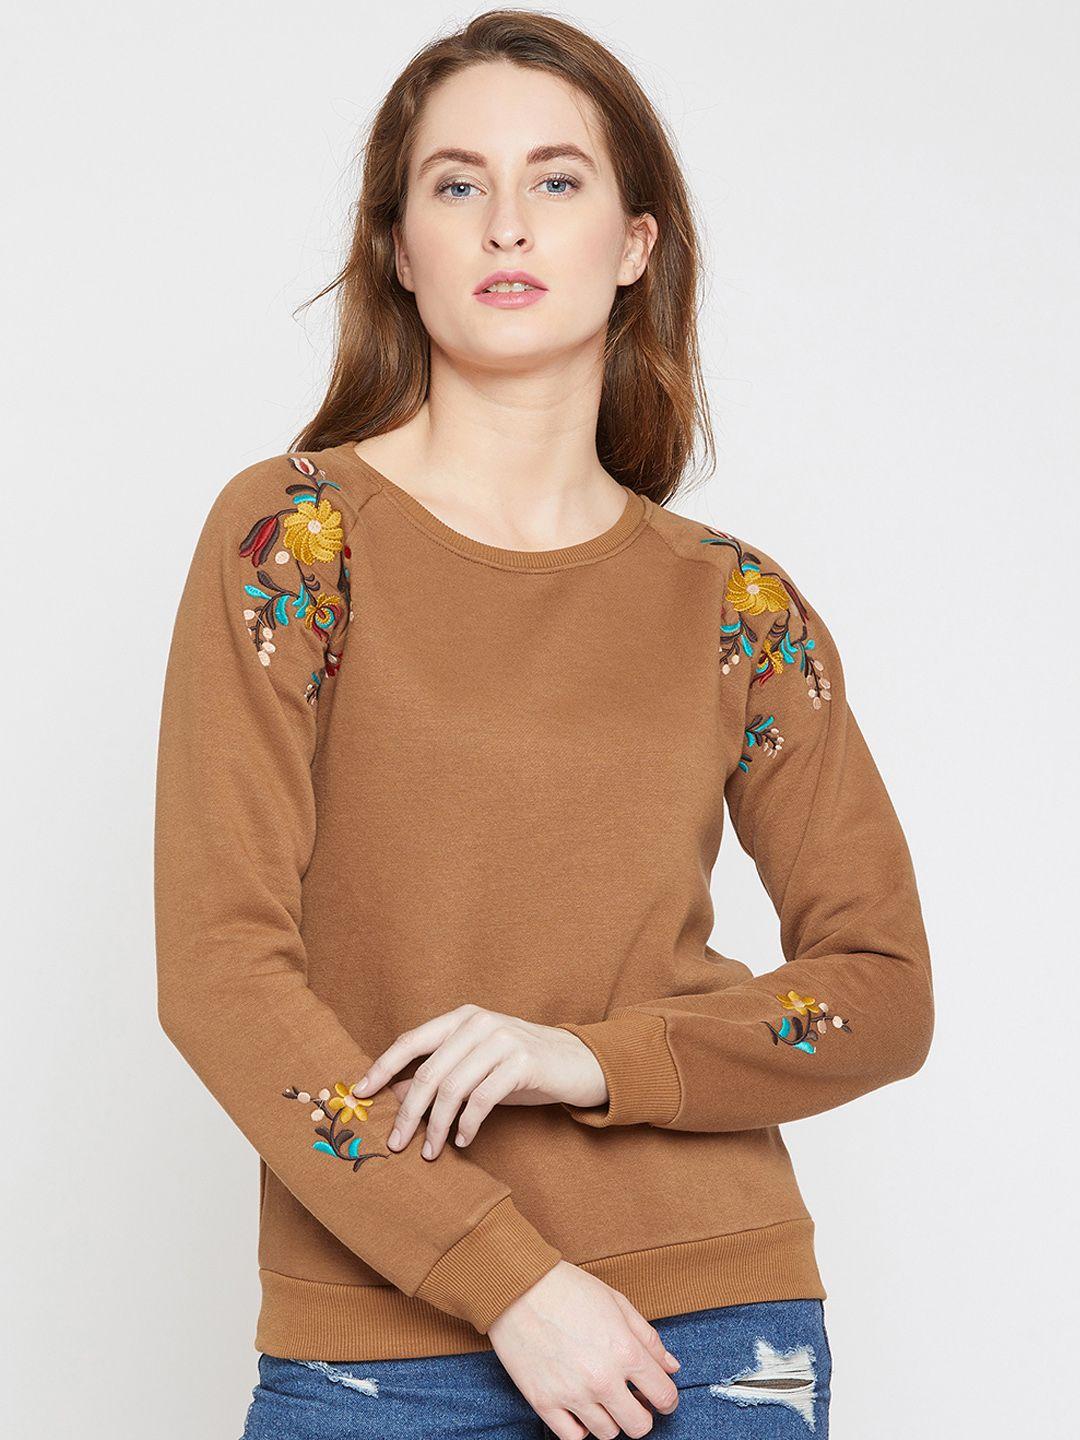 marie claire women brown printed sweatshirt